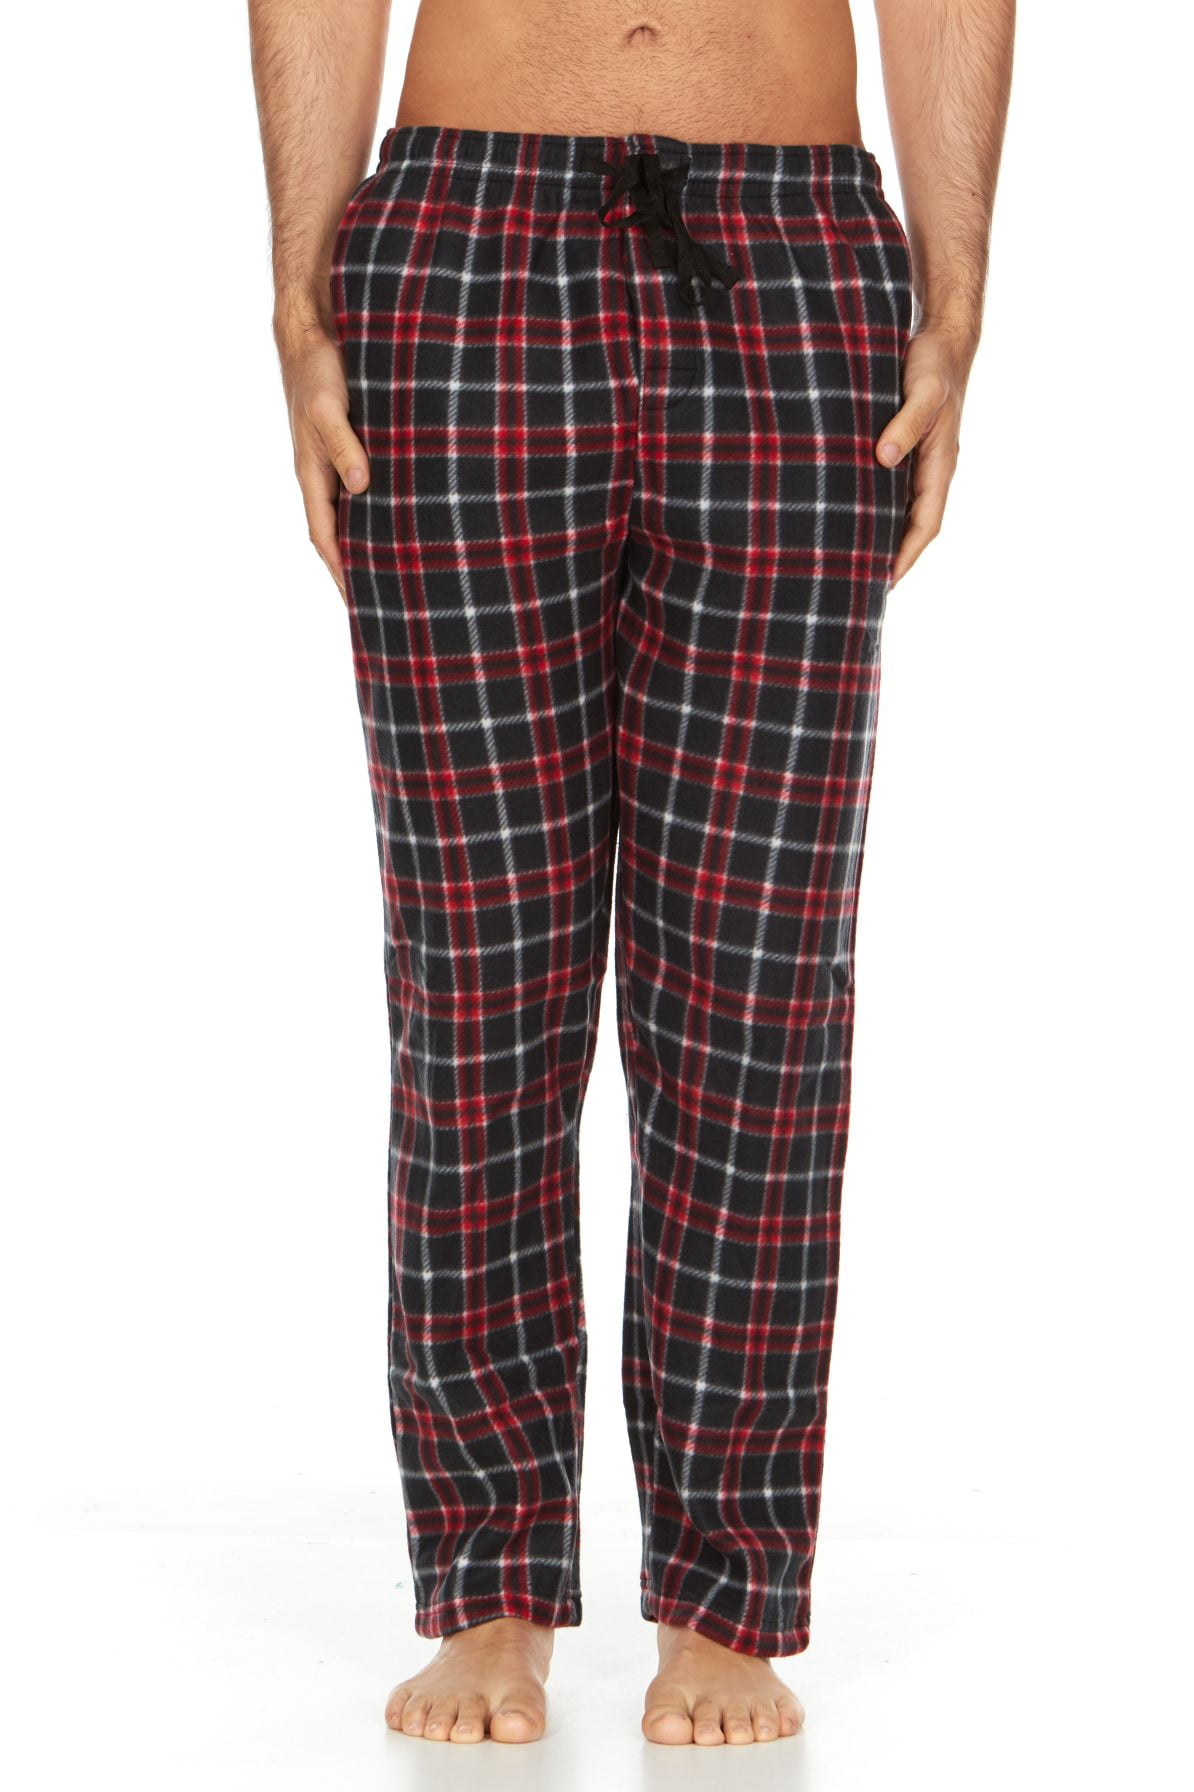 Men’s Microfleece Pajama Pants/Lounge Wear Pockets - Walmart.com